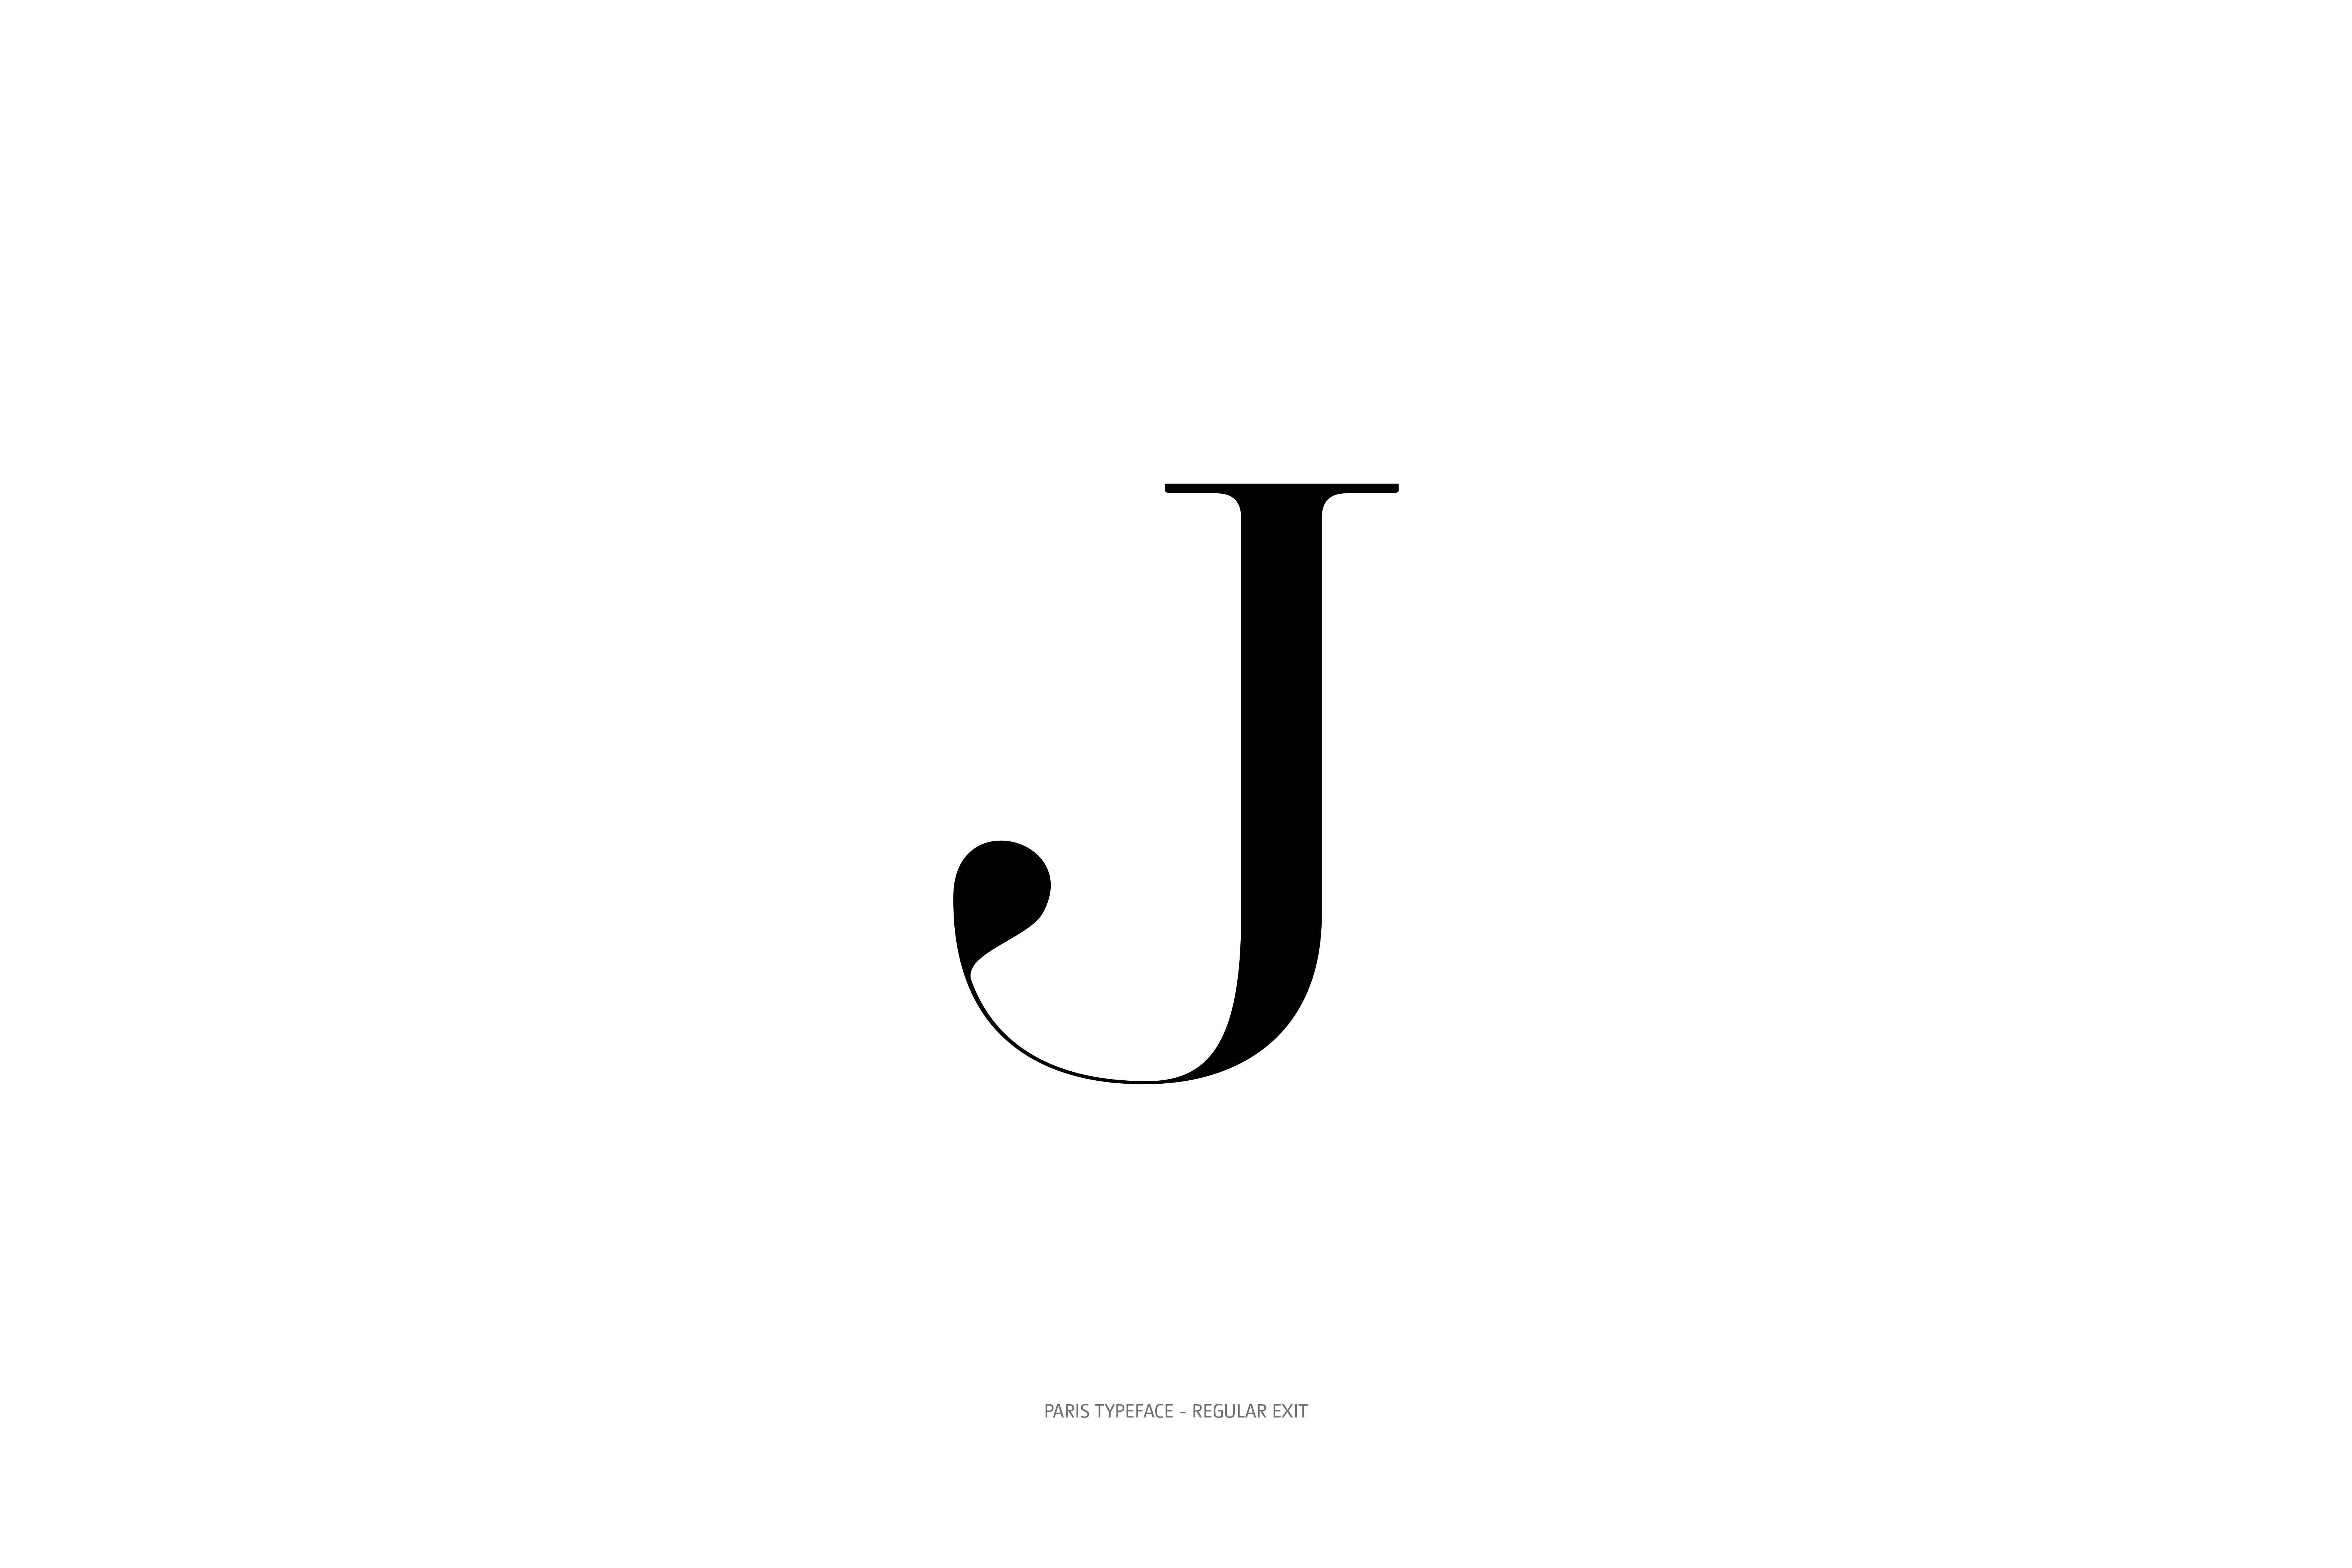 Paris Typeface Regular Exit J